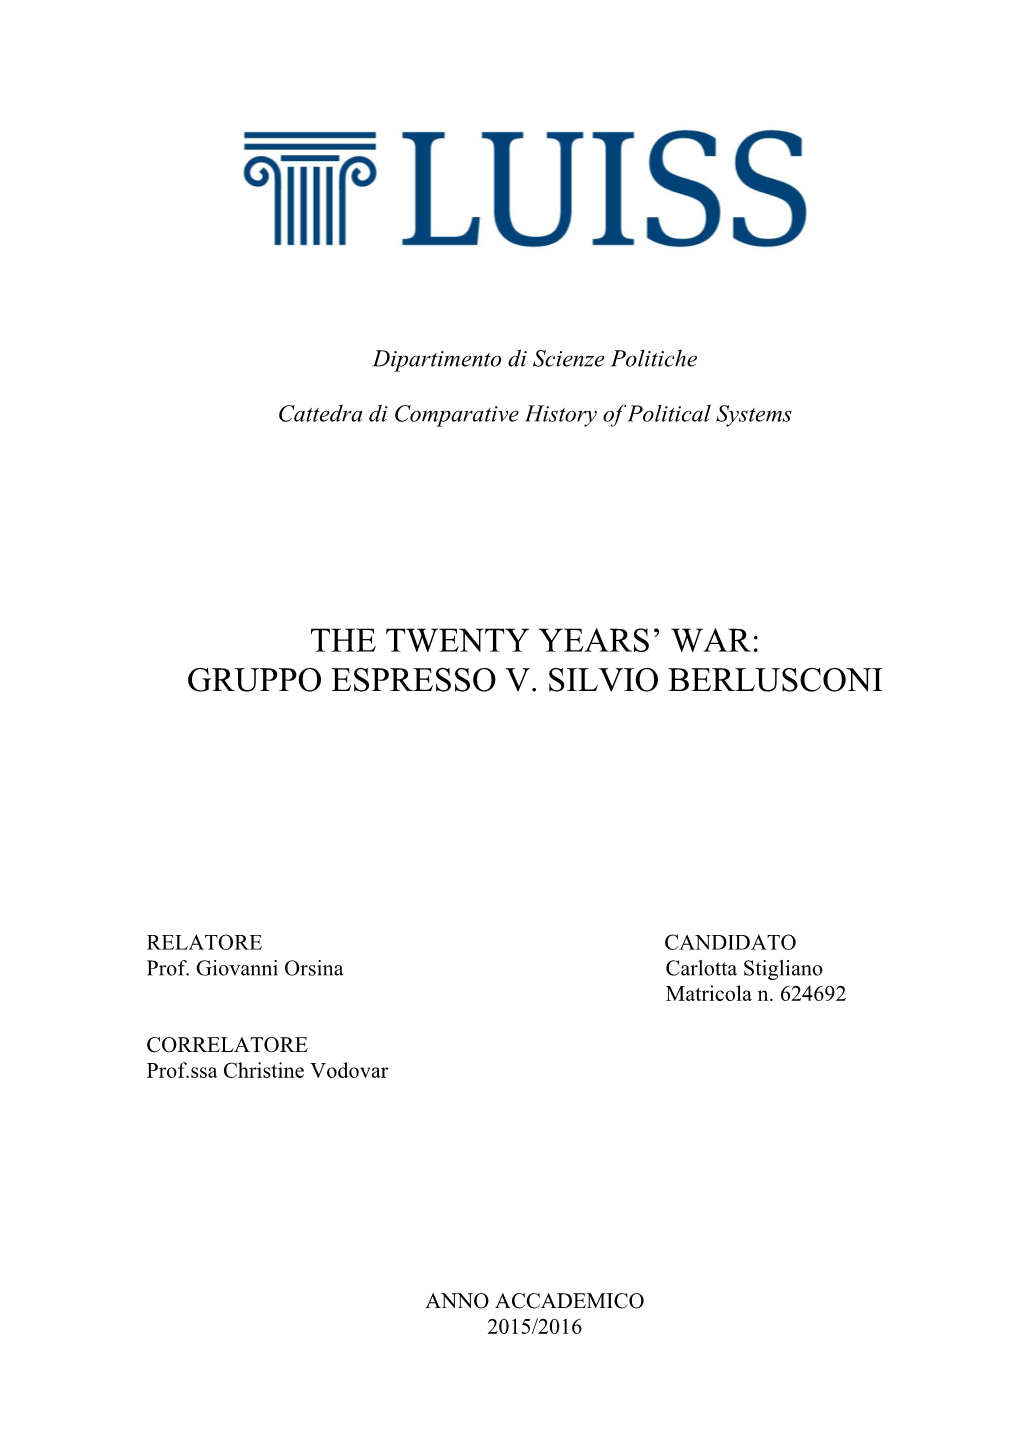 The Twenty Years' War: Gruppo Espresso V. Silvio Berlusconi